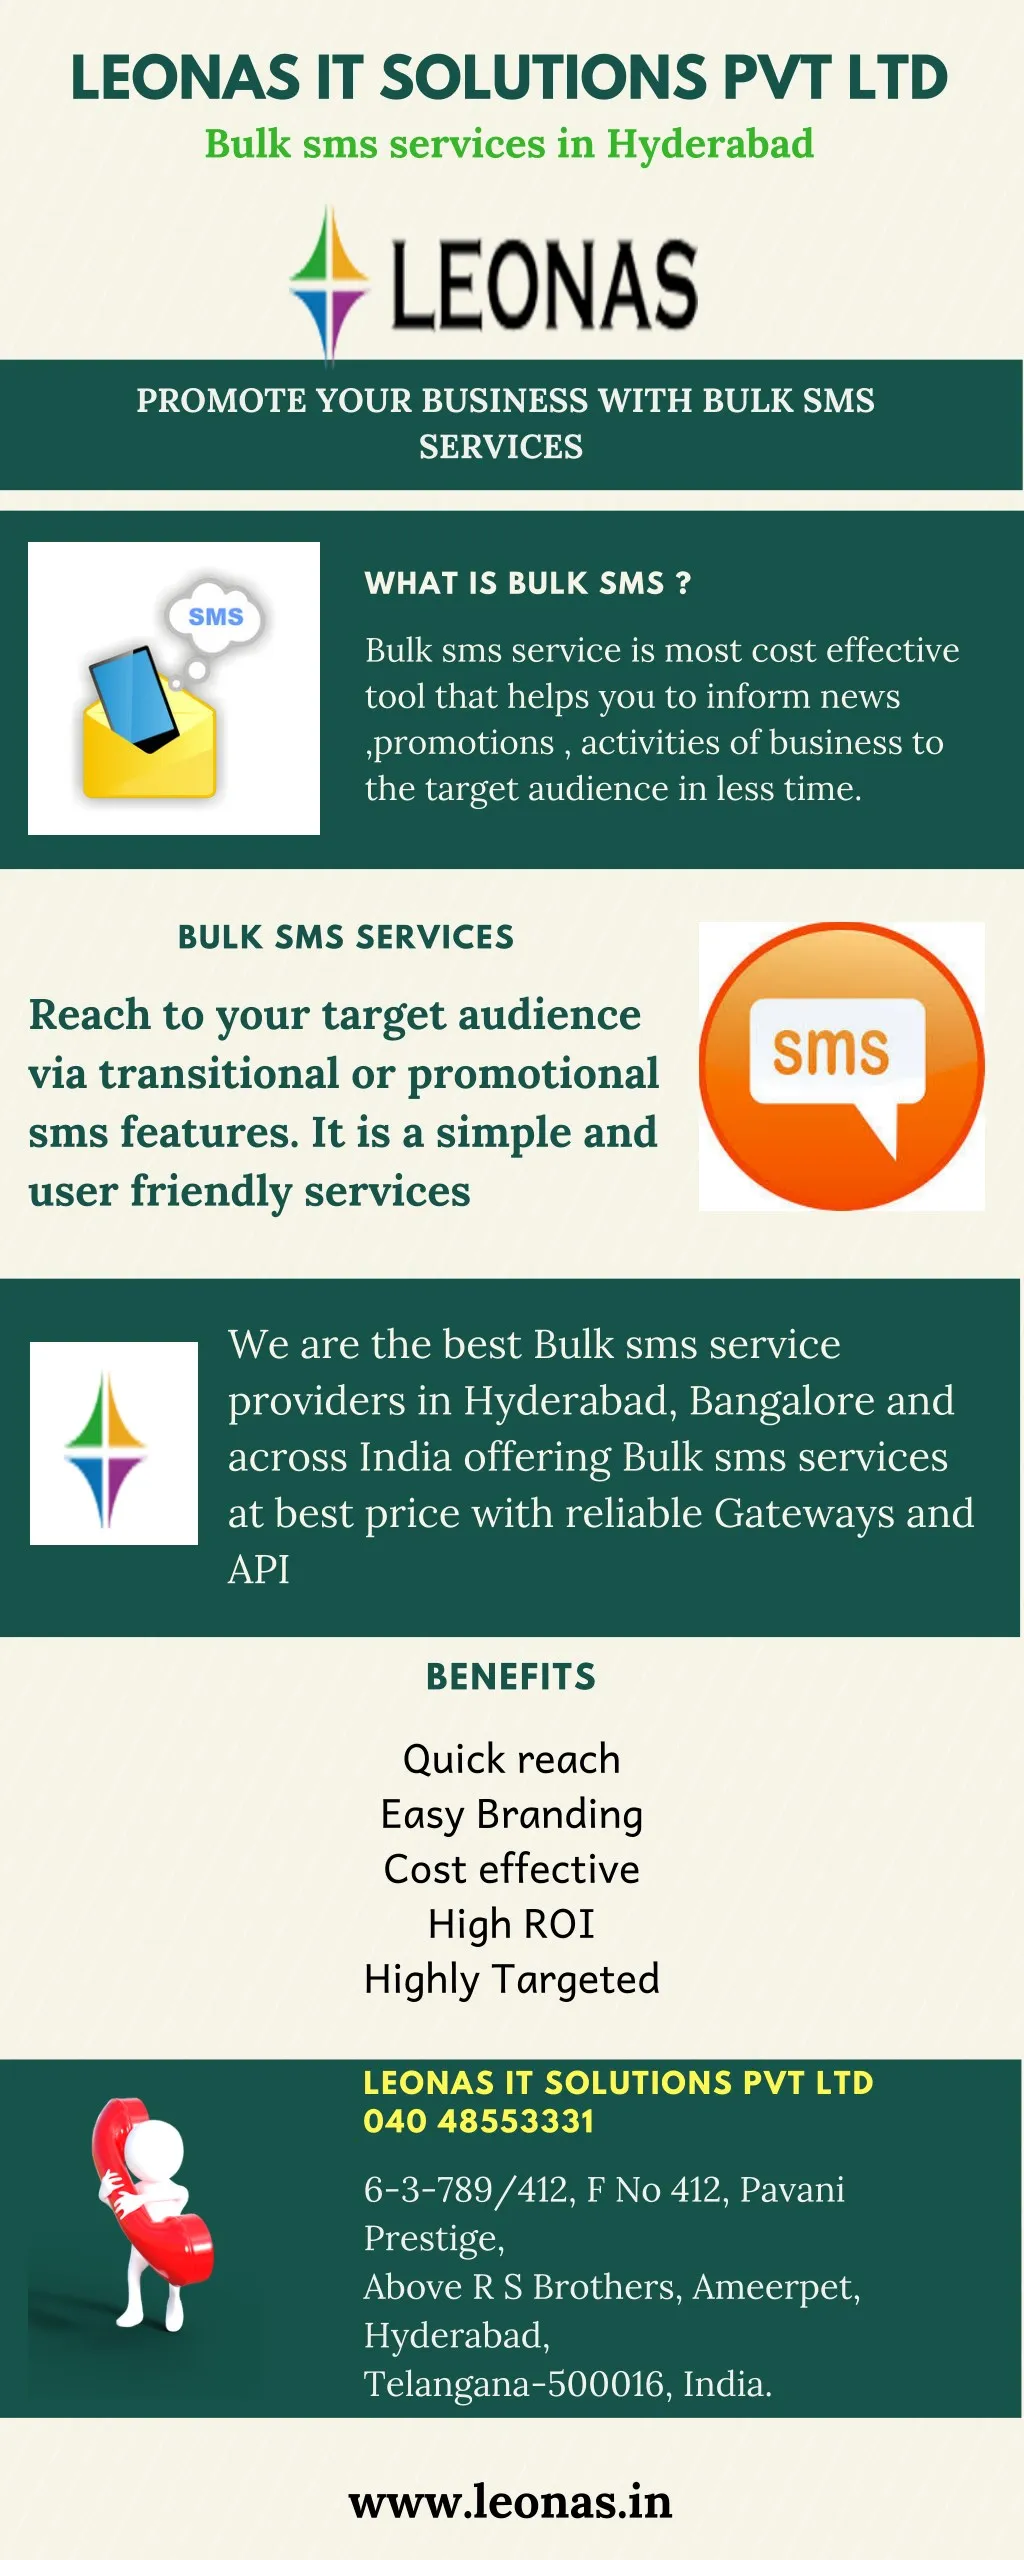 leonas it solutions pvt ltd bulk sms services